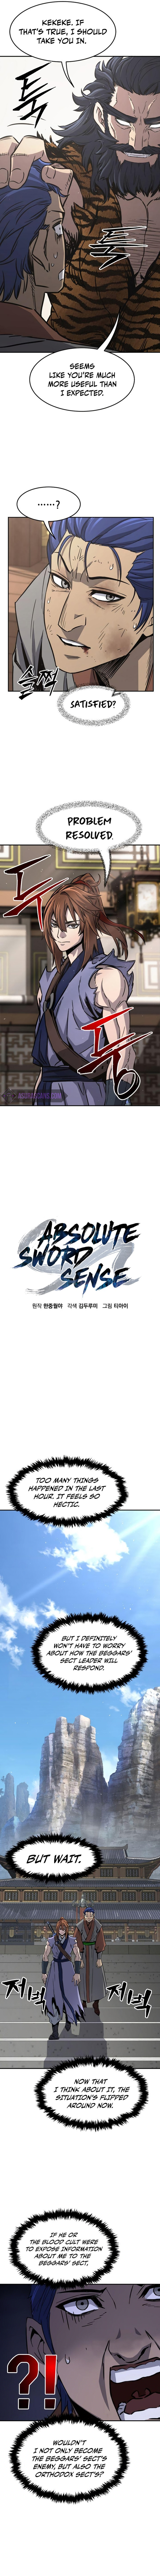 absolute_sword_sense_35_9